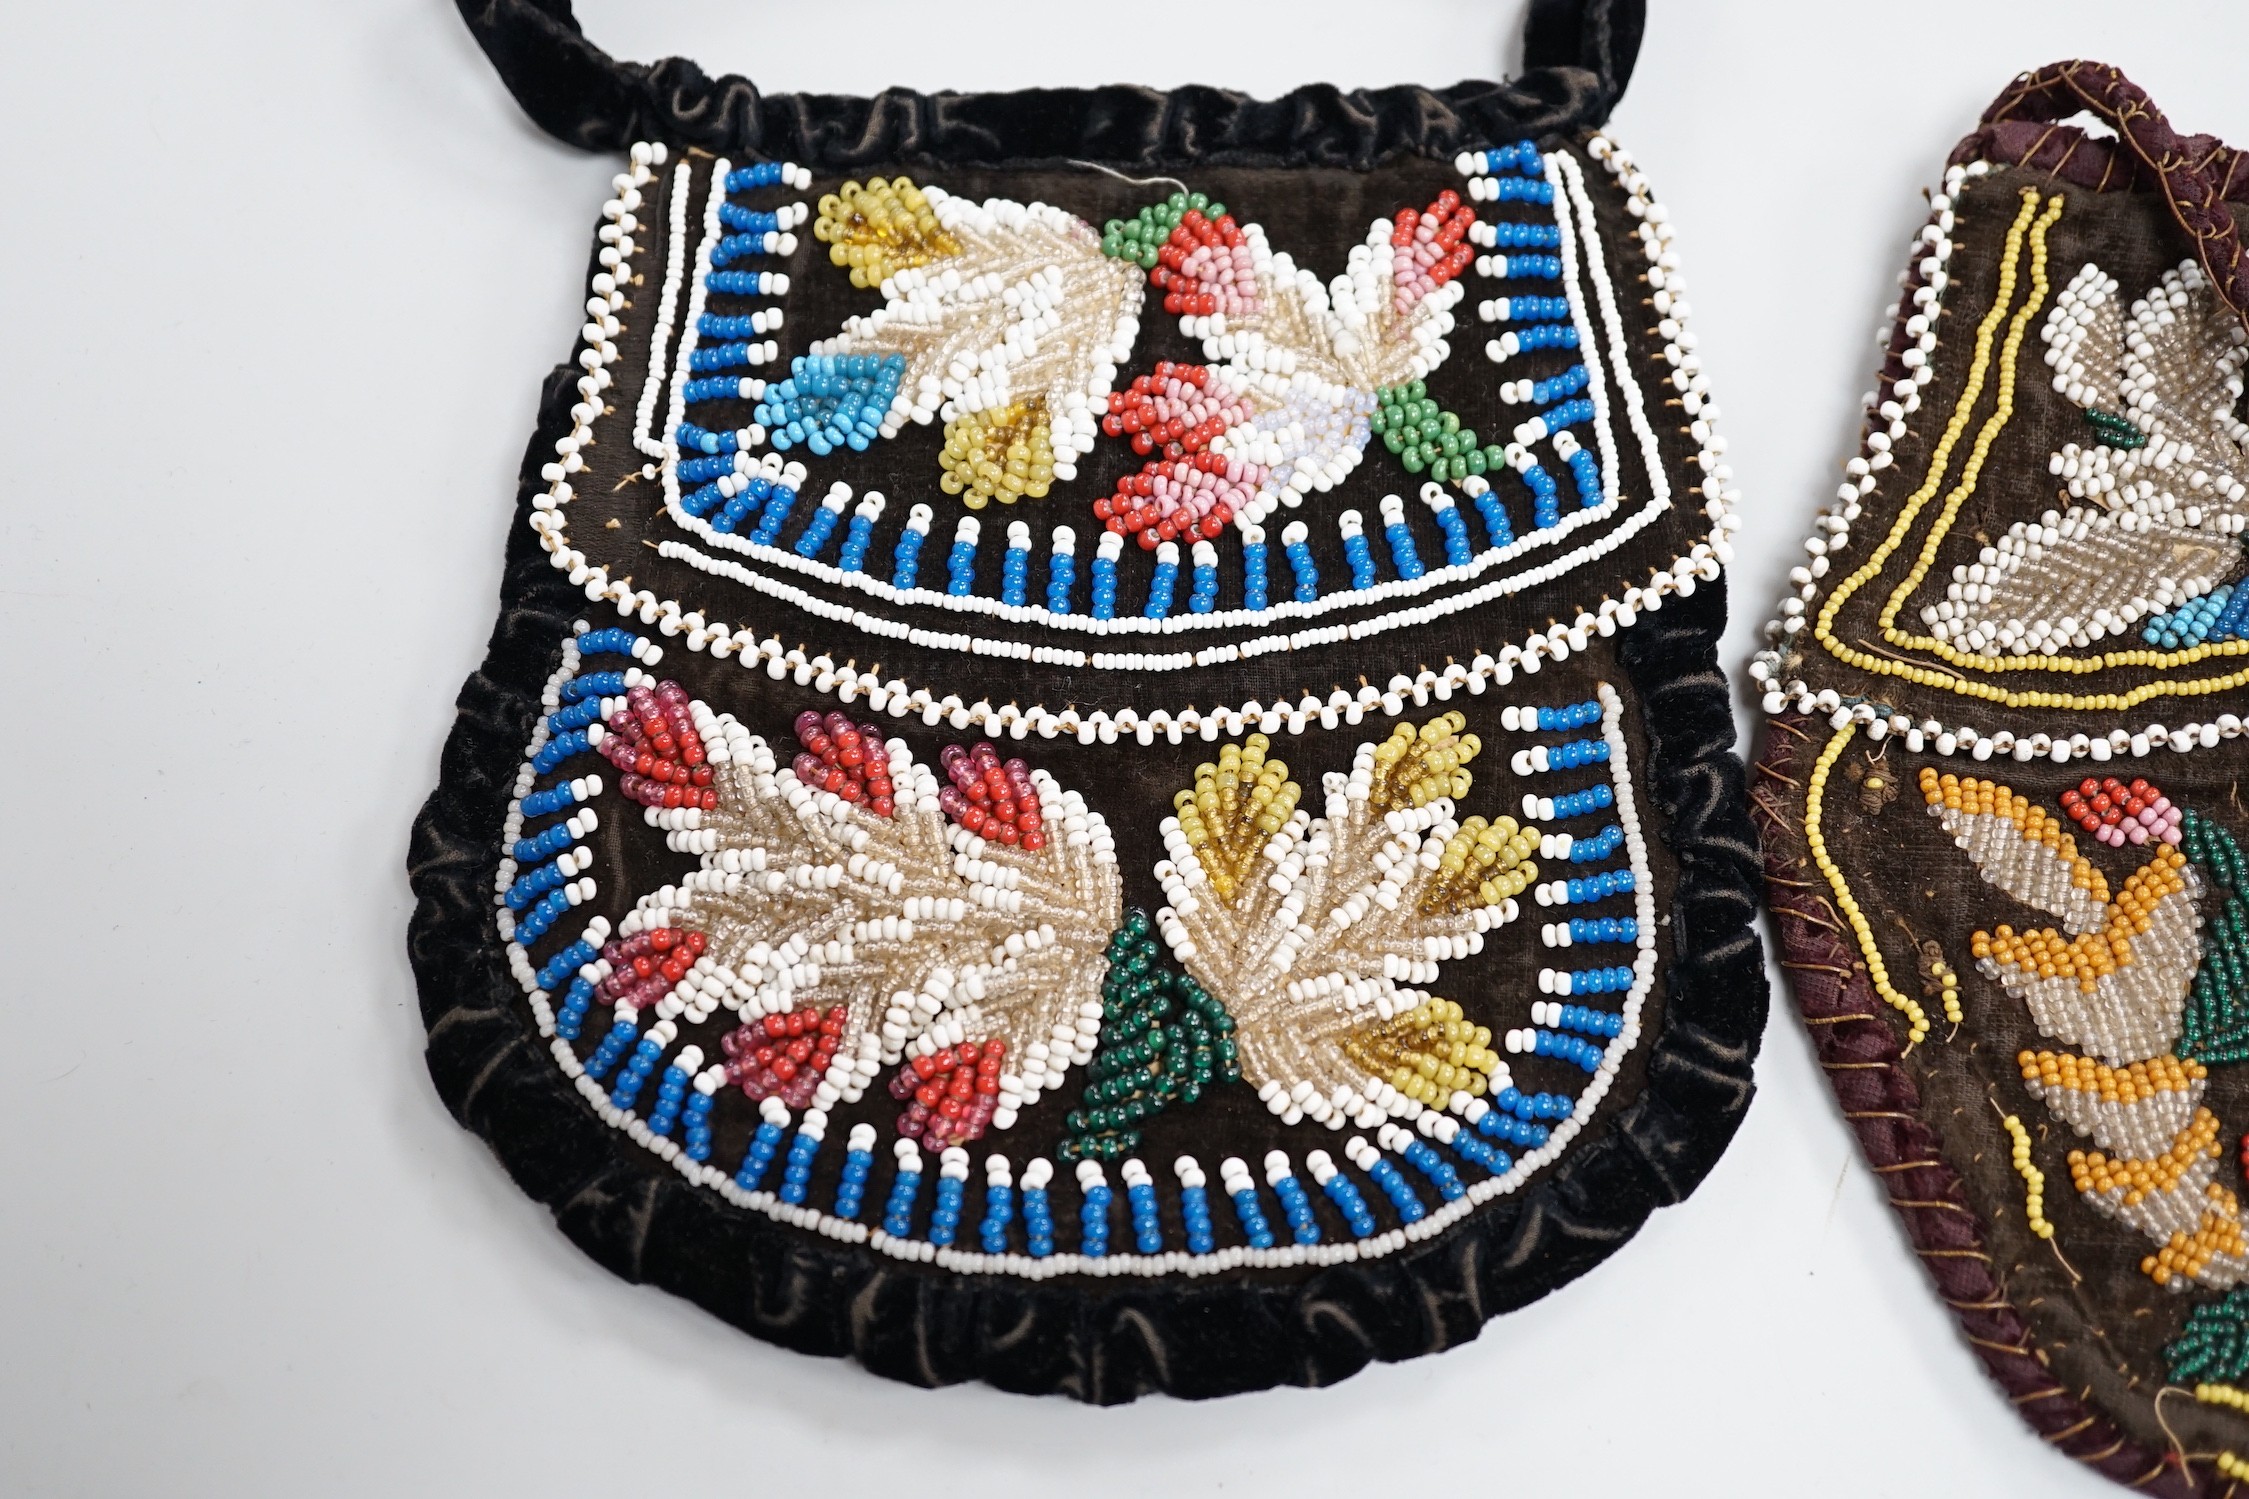 Three mid to late 19th century Haudenosaunee (Iroquois) North American Indian glass beaded velvet bags